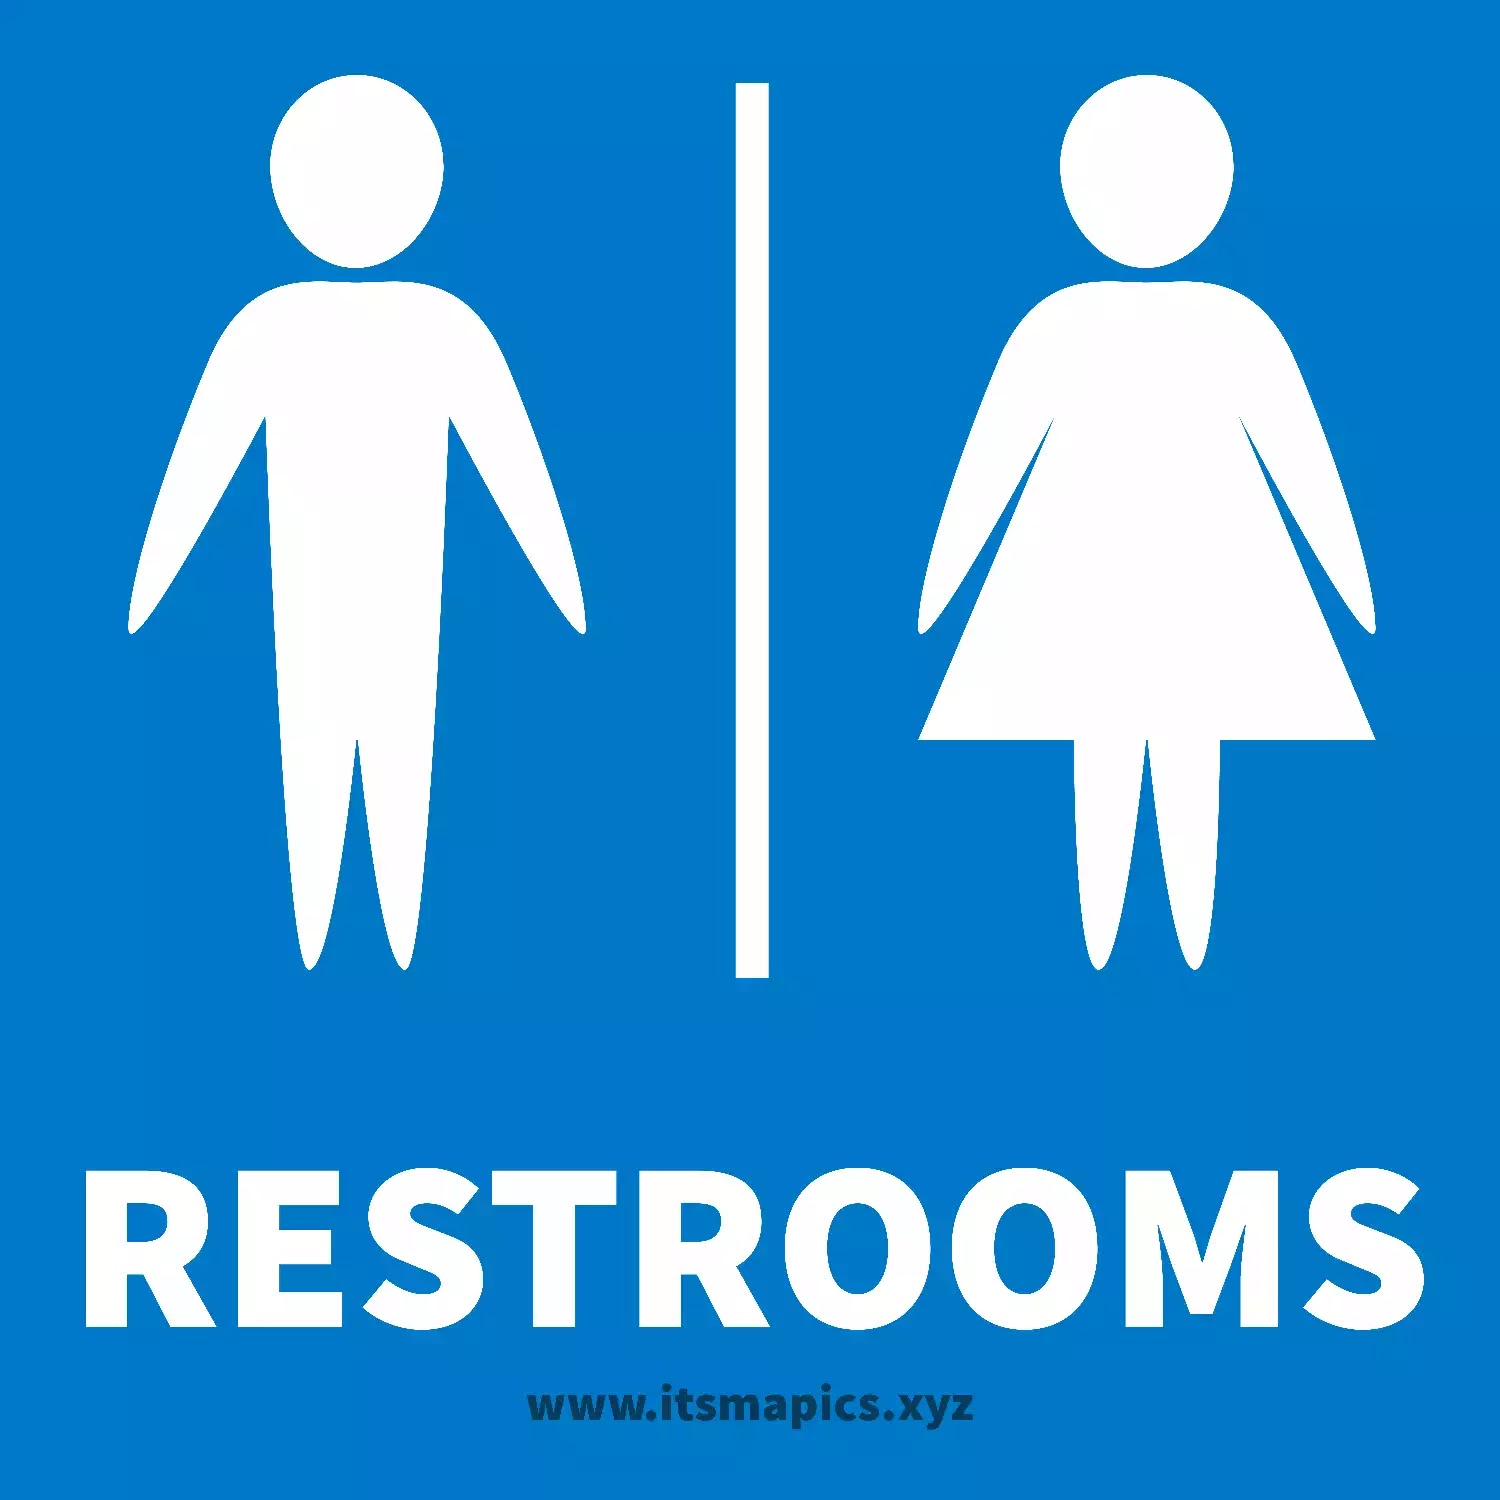 Free Printable Restroom Signs Bathroom Toilet Signage With Arrow